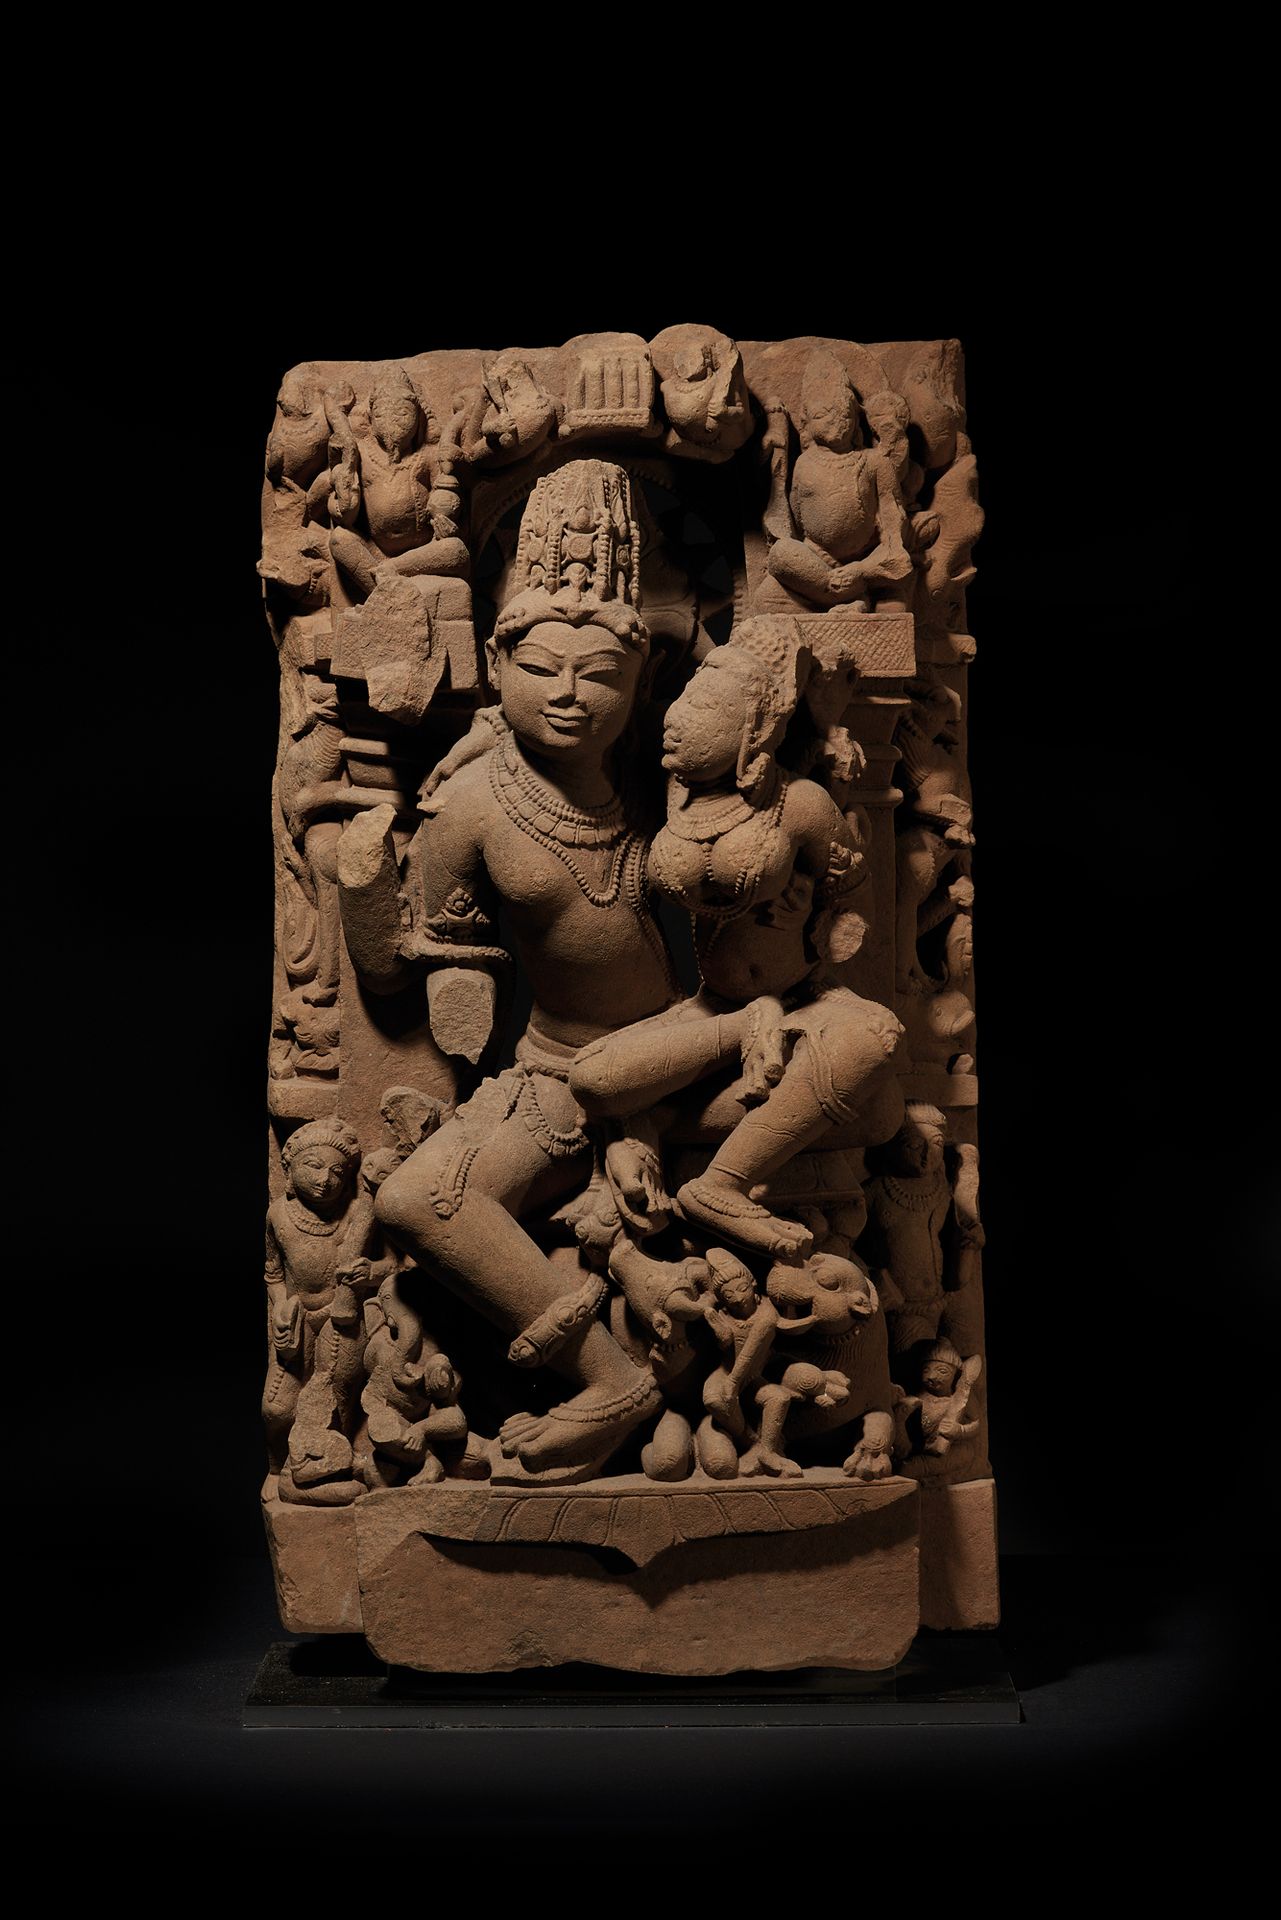 INDE - Xe siècle Bedeutende Stele aus grauem Sandstein, die Uma Maheshvara darst&hellip;